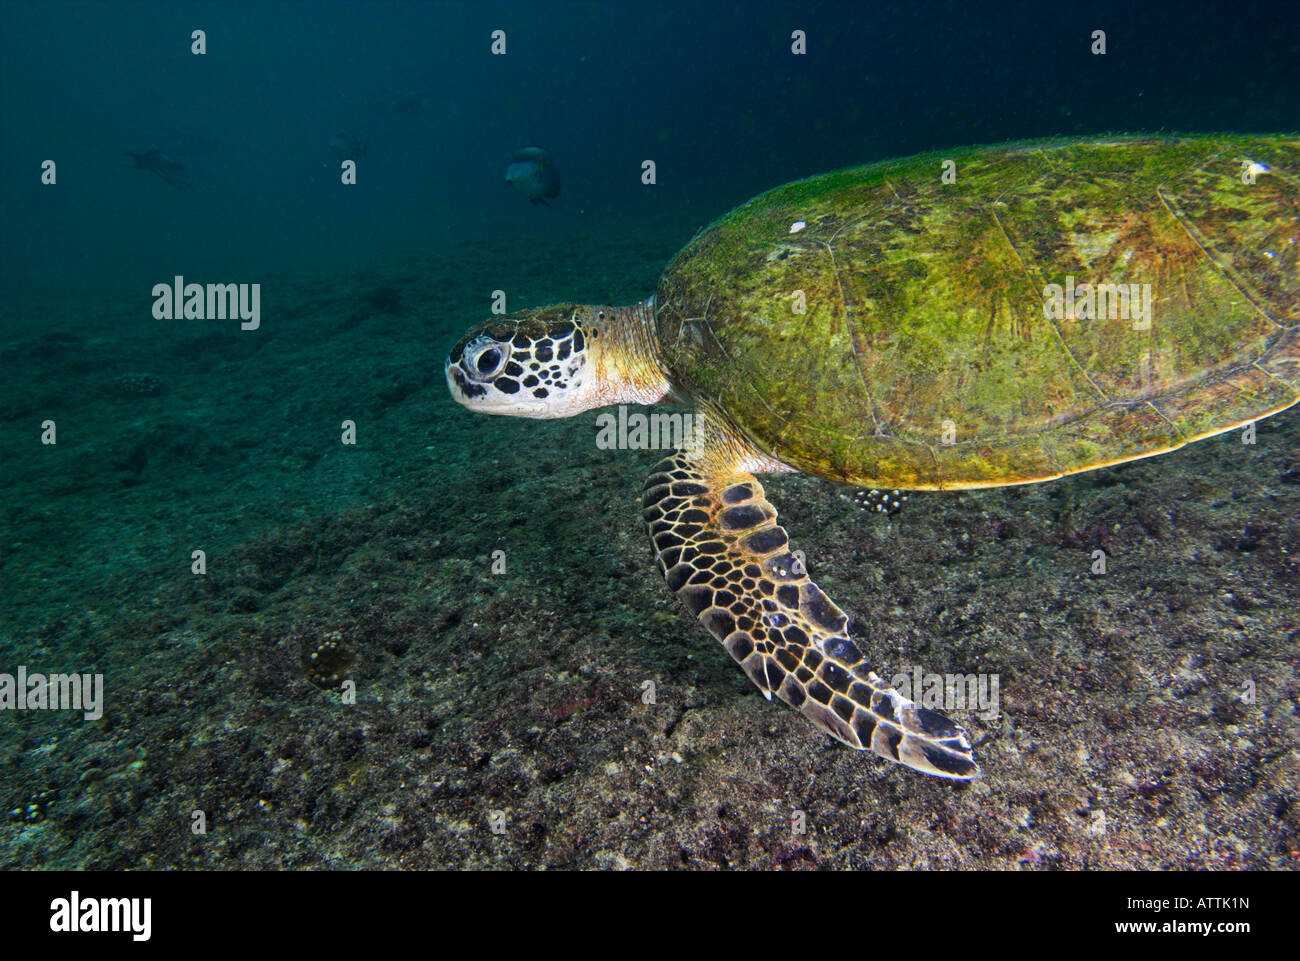 Green sea turtle Chelonia mydas swimming underwater Daymaniyat Islands Gulf of Oman Stock Photo